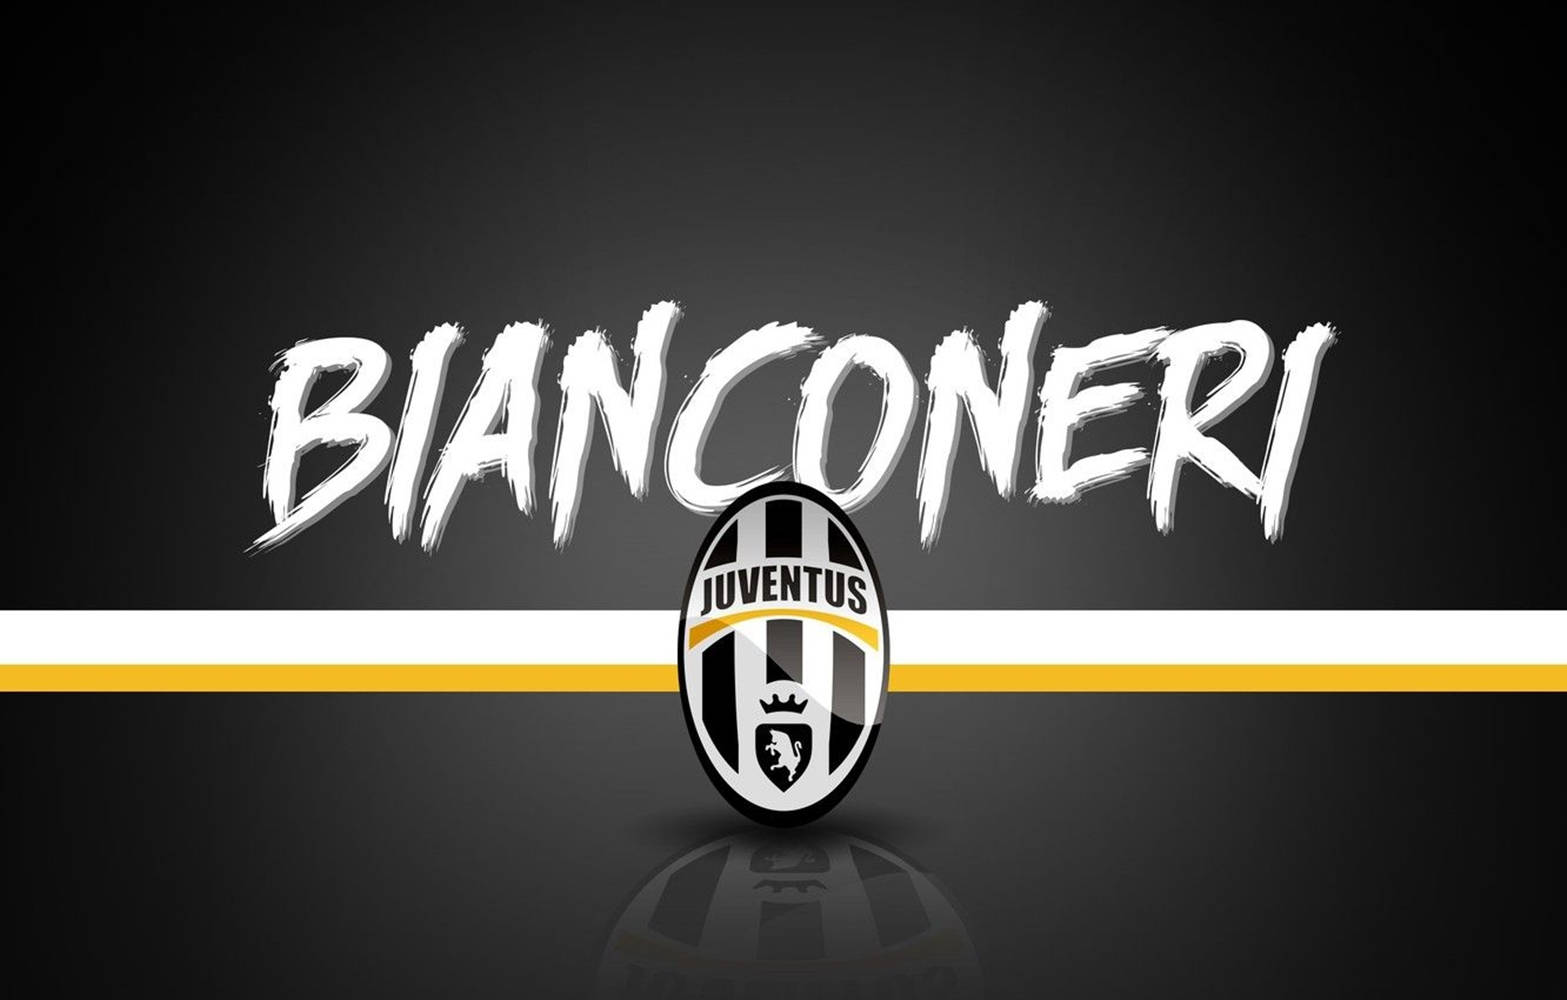 Juventusfußballteam Bianconeri-logo Wallpaper